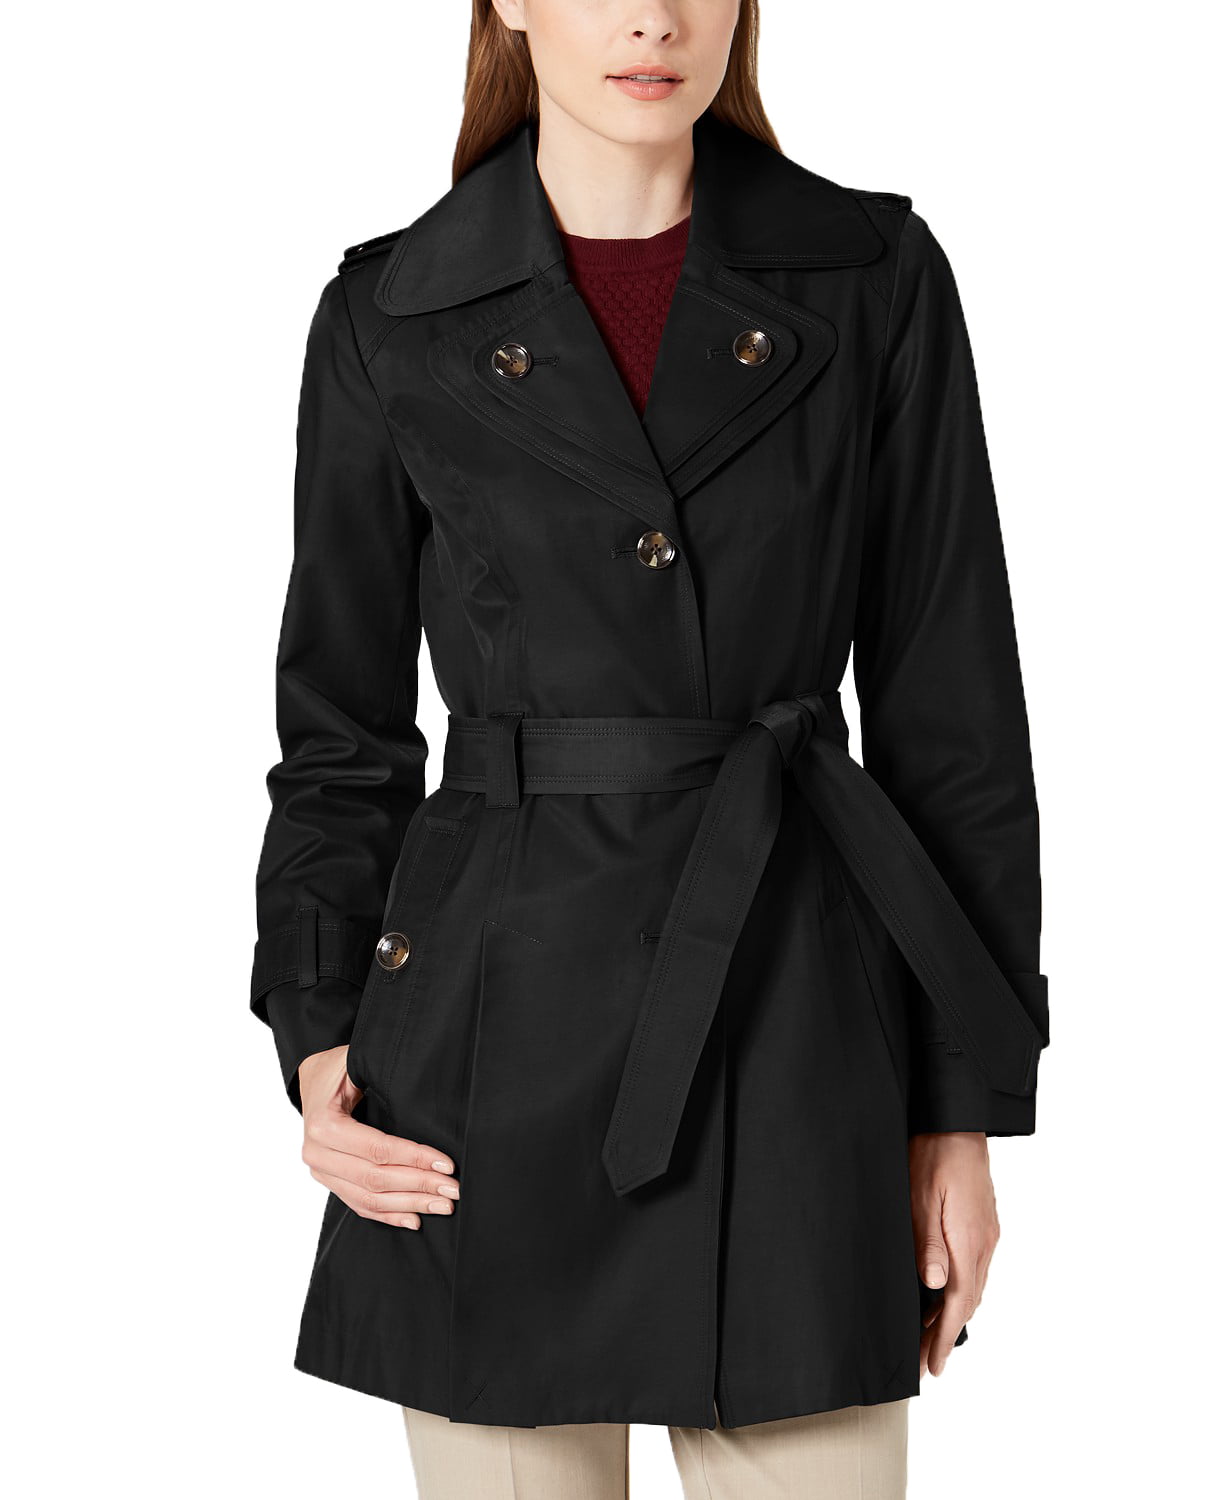 YUNY Womens Multi-Zipper Short Rider Style Leather Trench Coat Black XS 